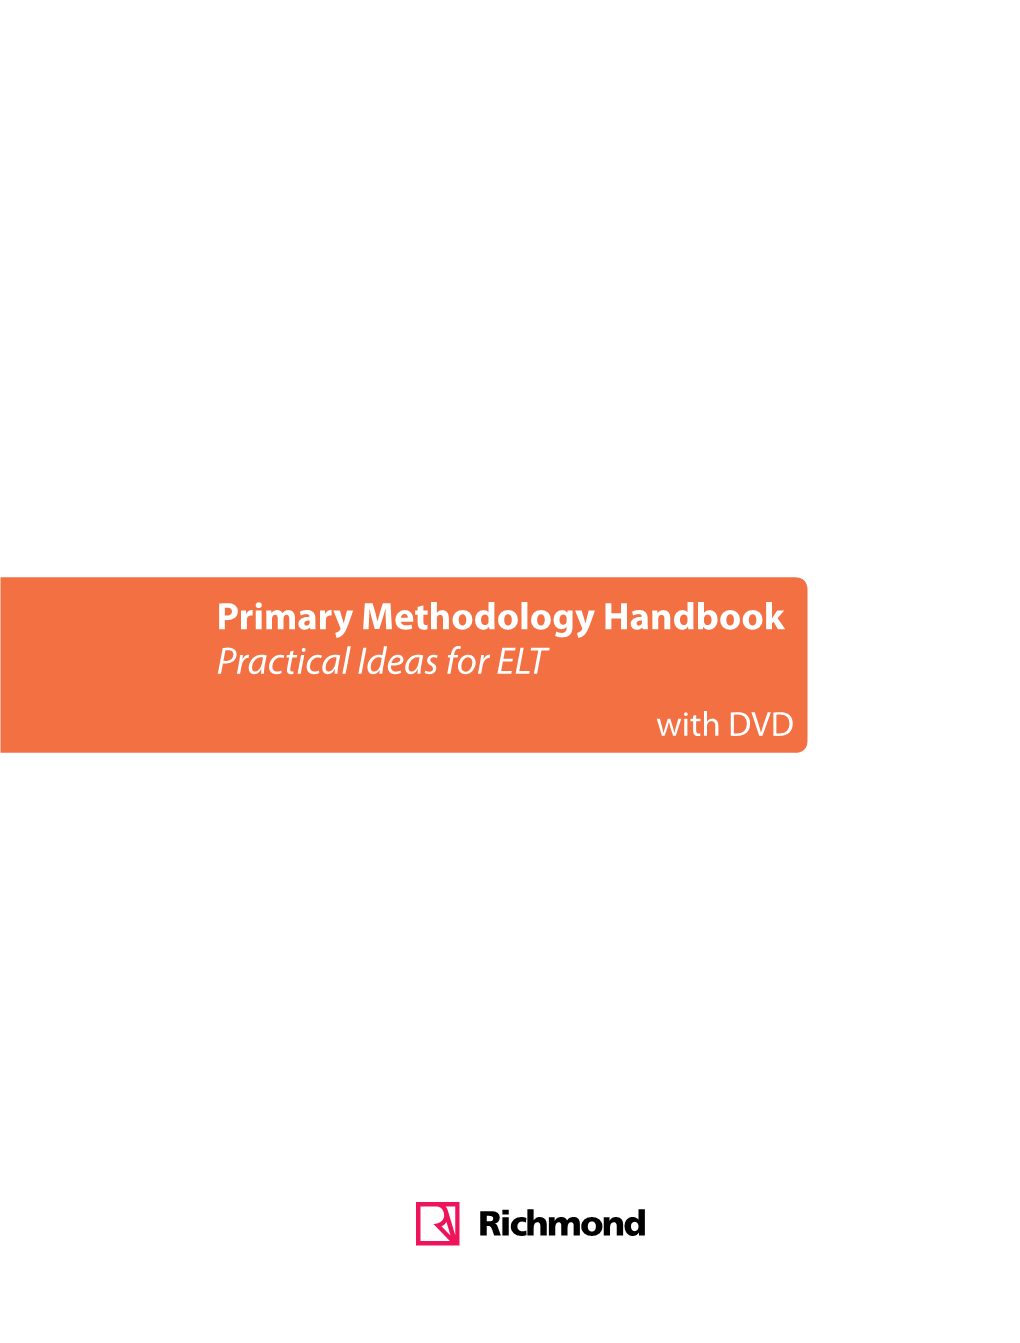 Primary Methodology Handbook Practical Ideas for ELT with DVD 58 St Aldates Oxford OX1 1ST United Kingdom